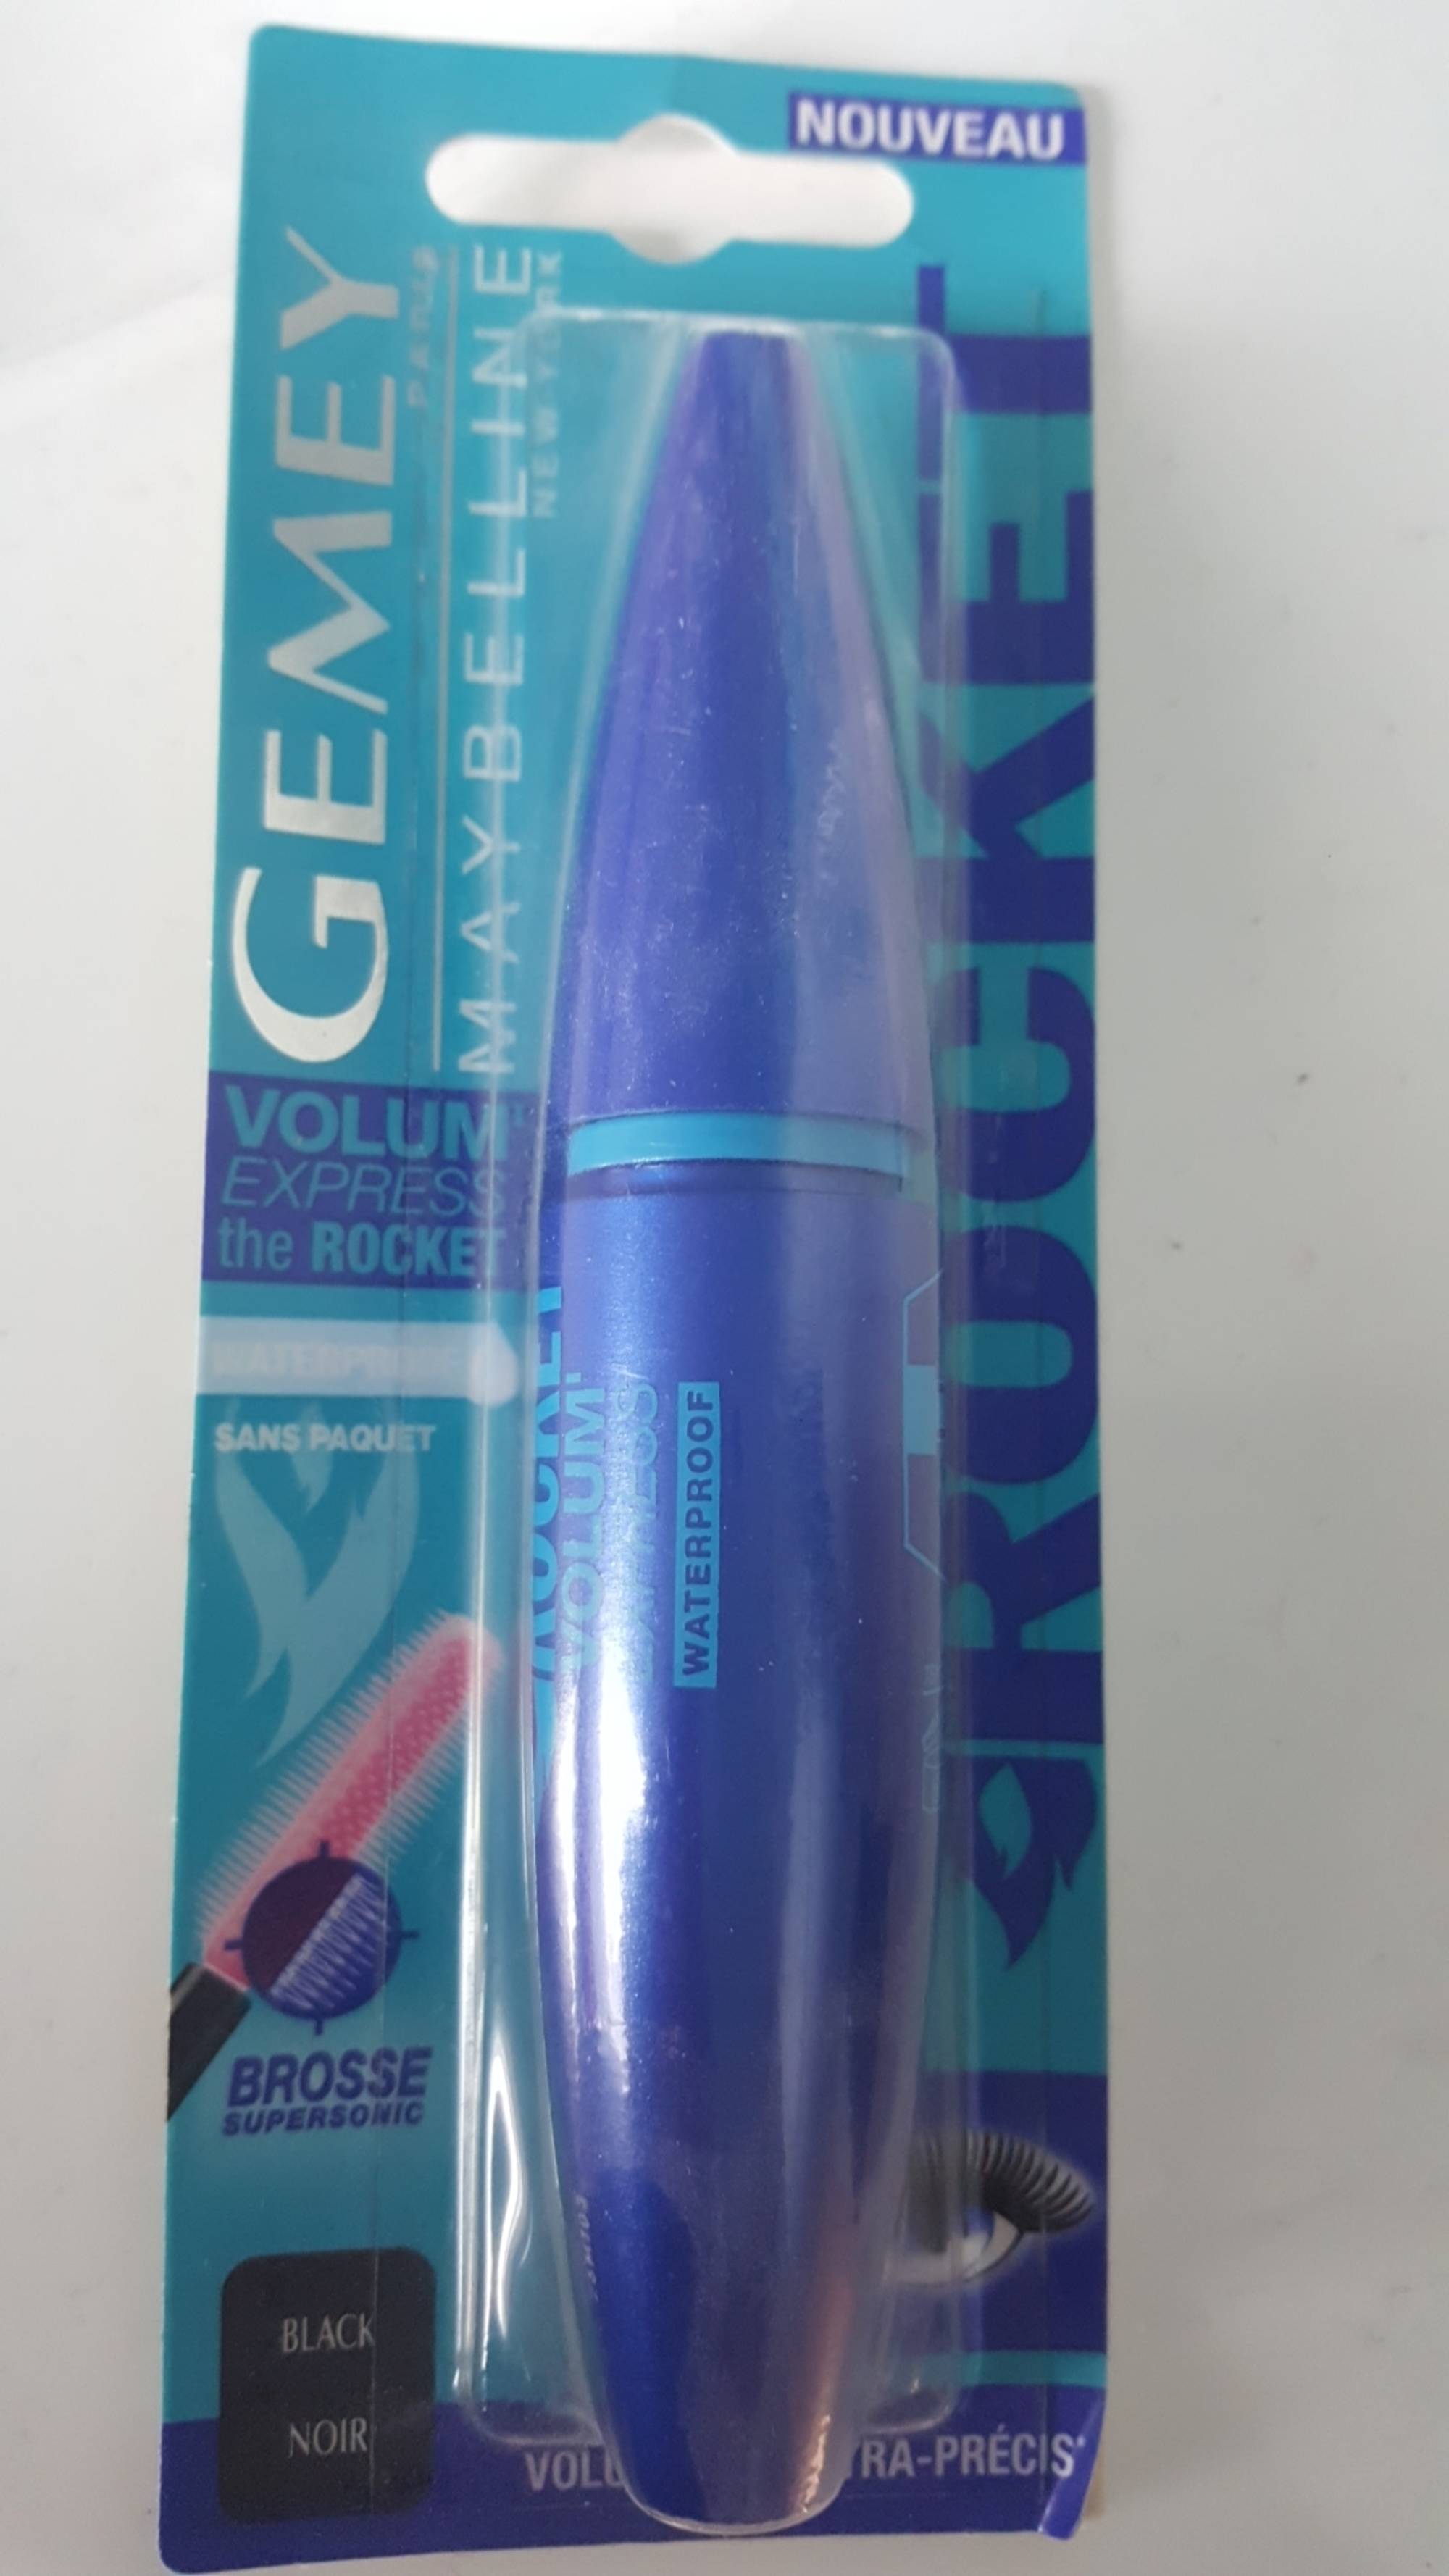 GEMEY MAYBELLINE - The rocket volum express - Mascara waterproof - Noir